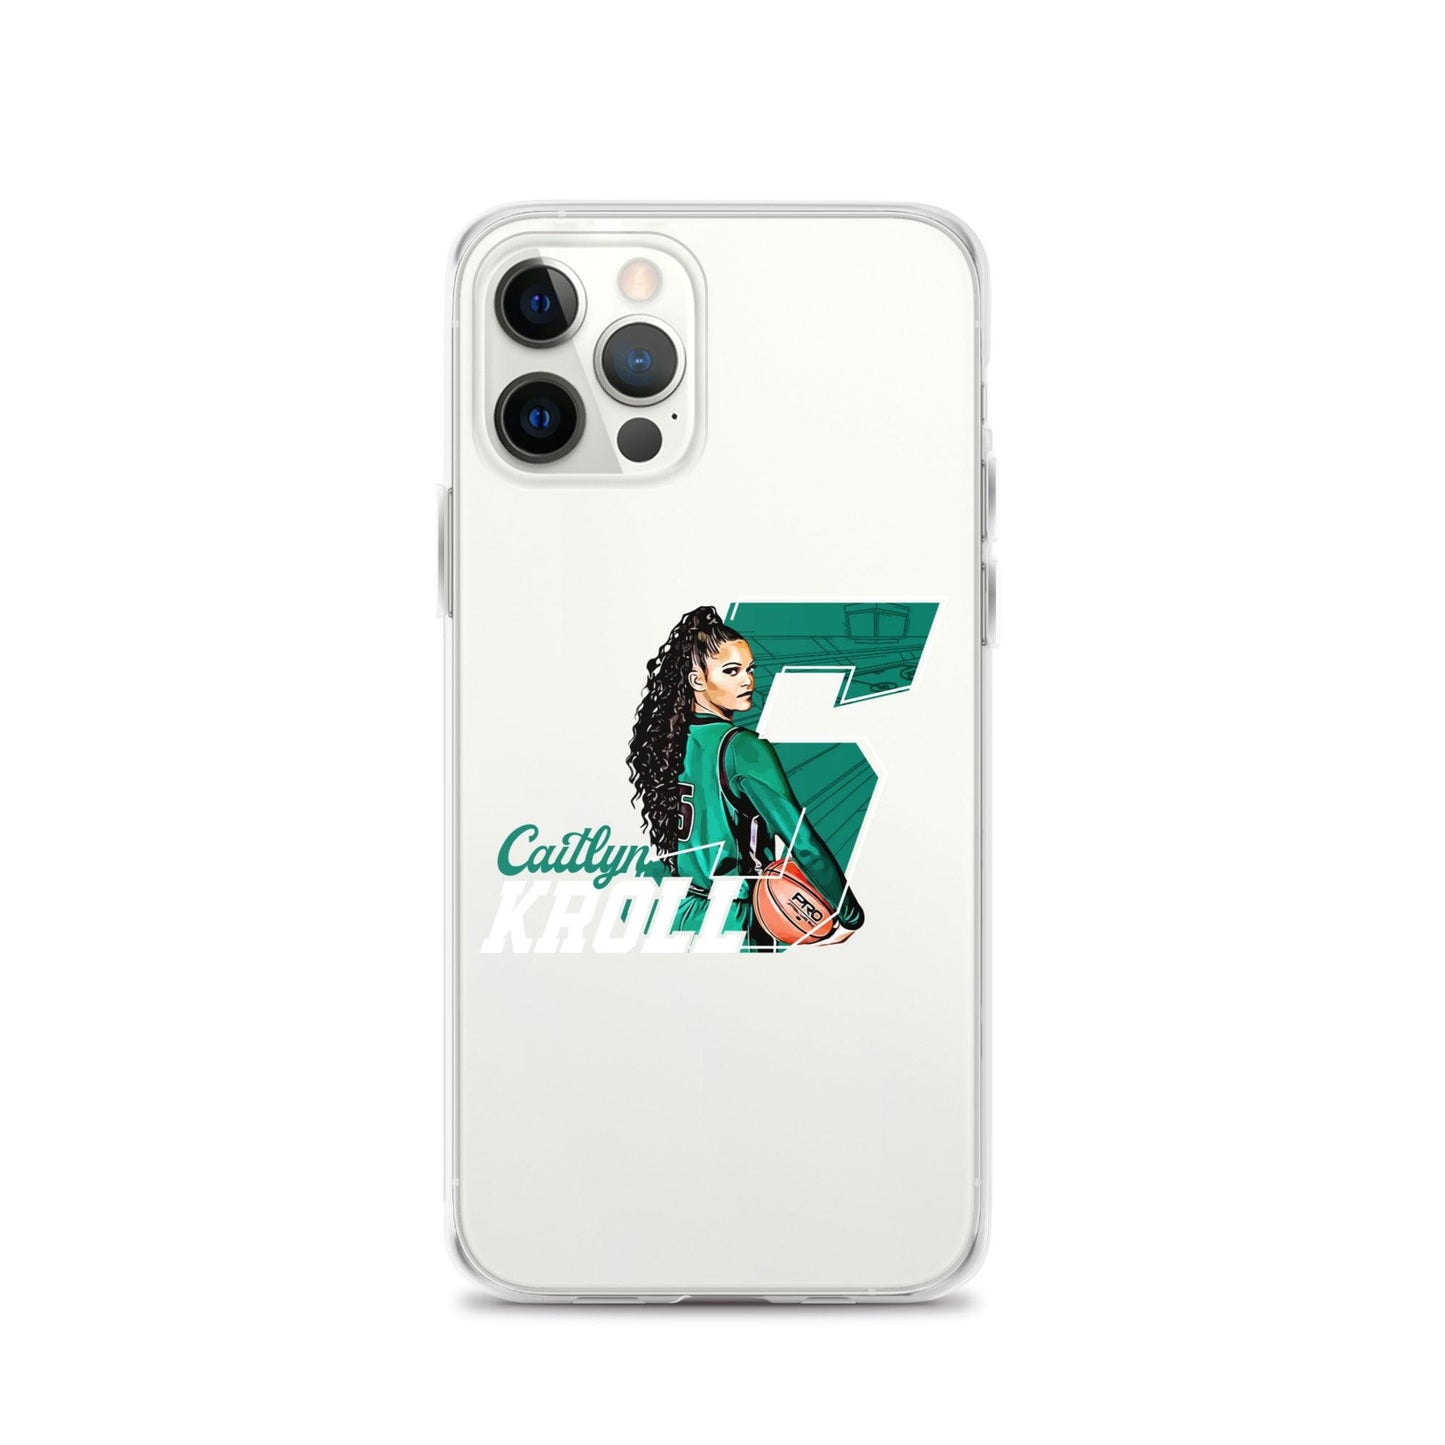 Caitlyn Kroll "Gameday" iPhone Case - Fan Arch